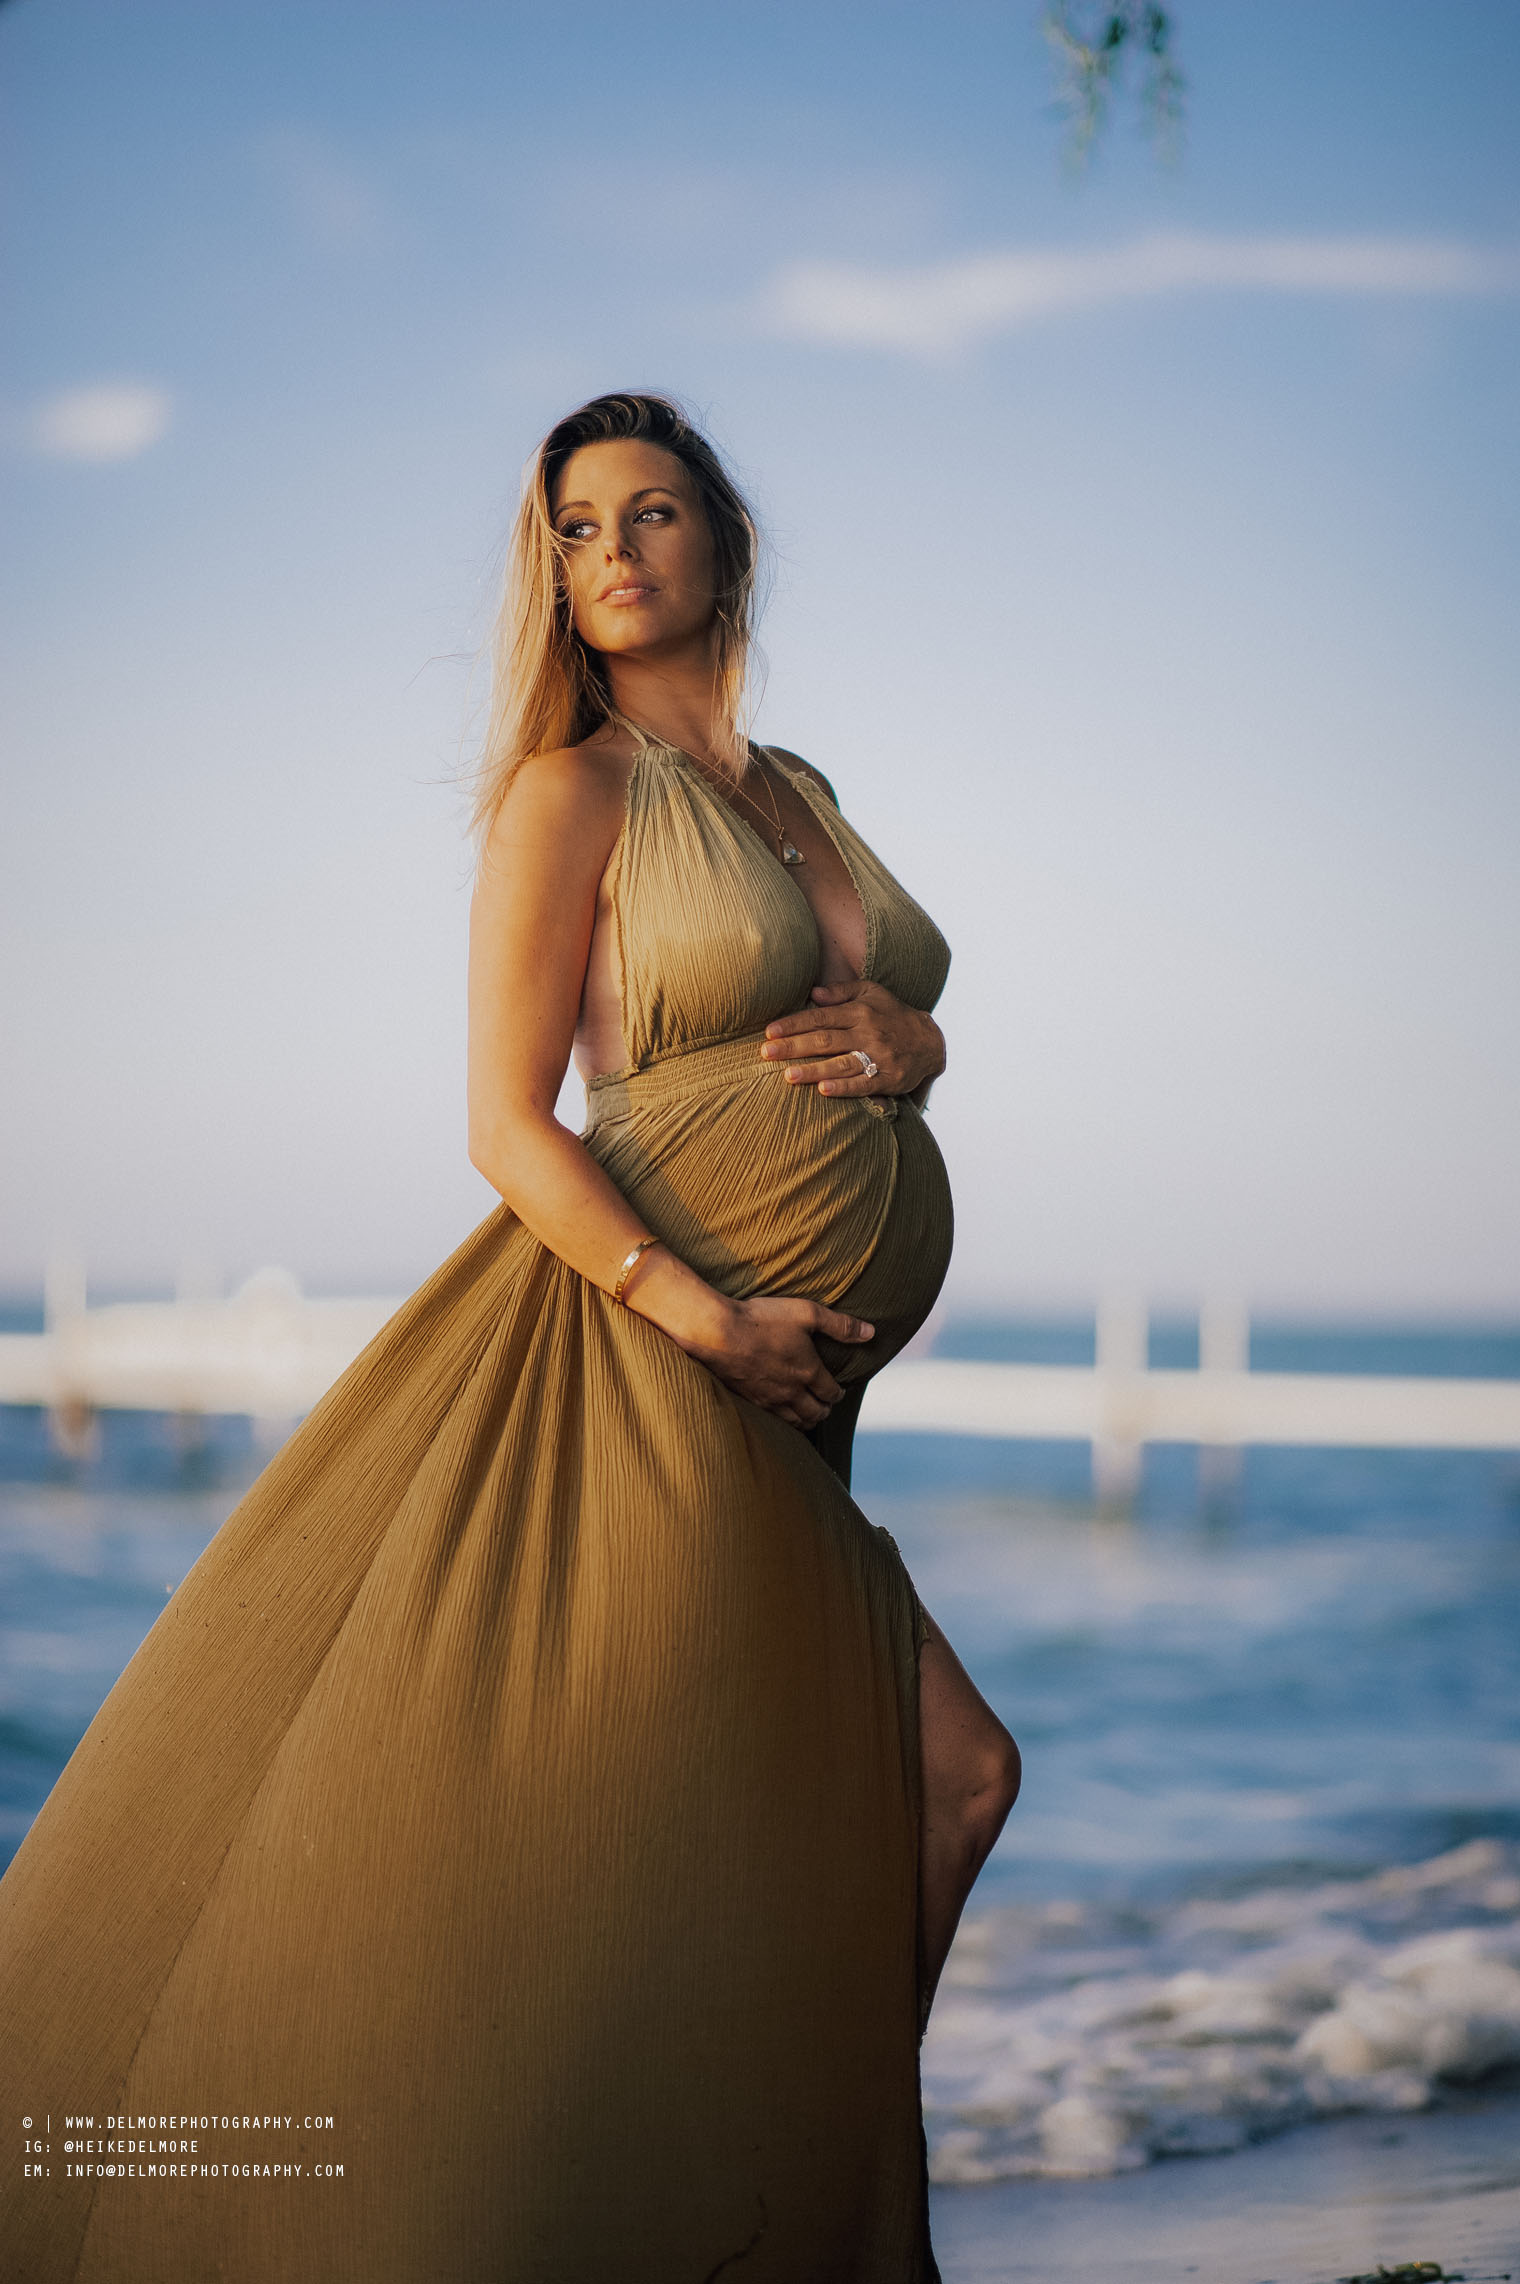 Top Windsor Maternity Photographer Heike Delmore Lake Shoot